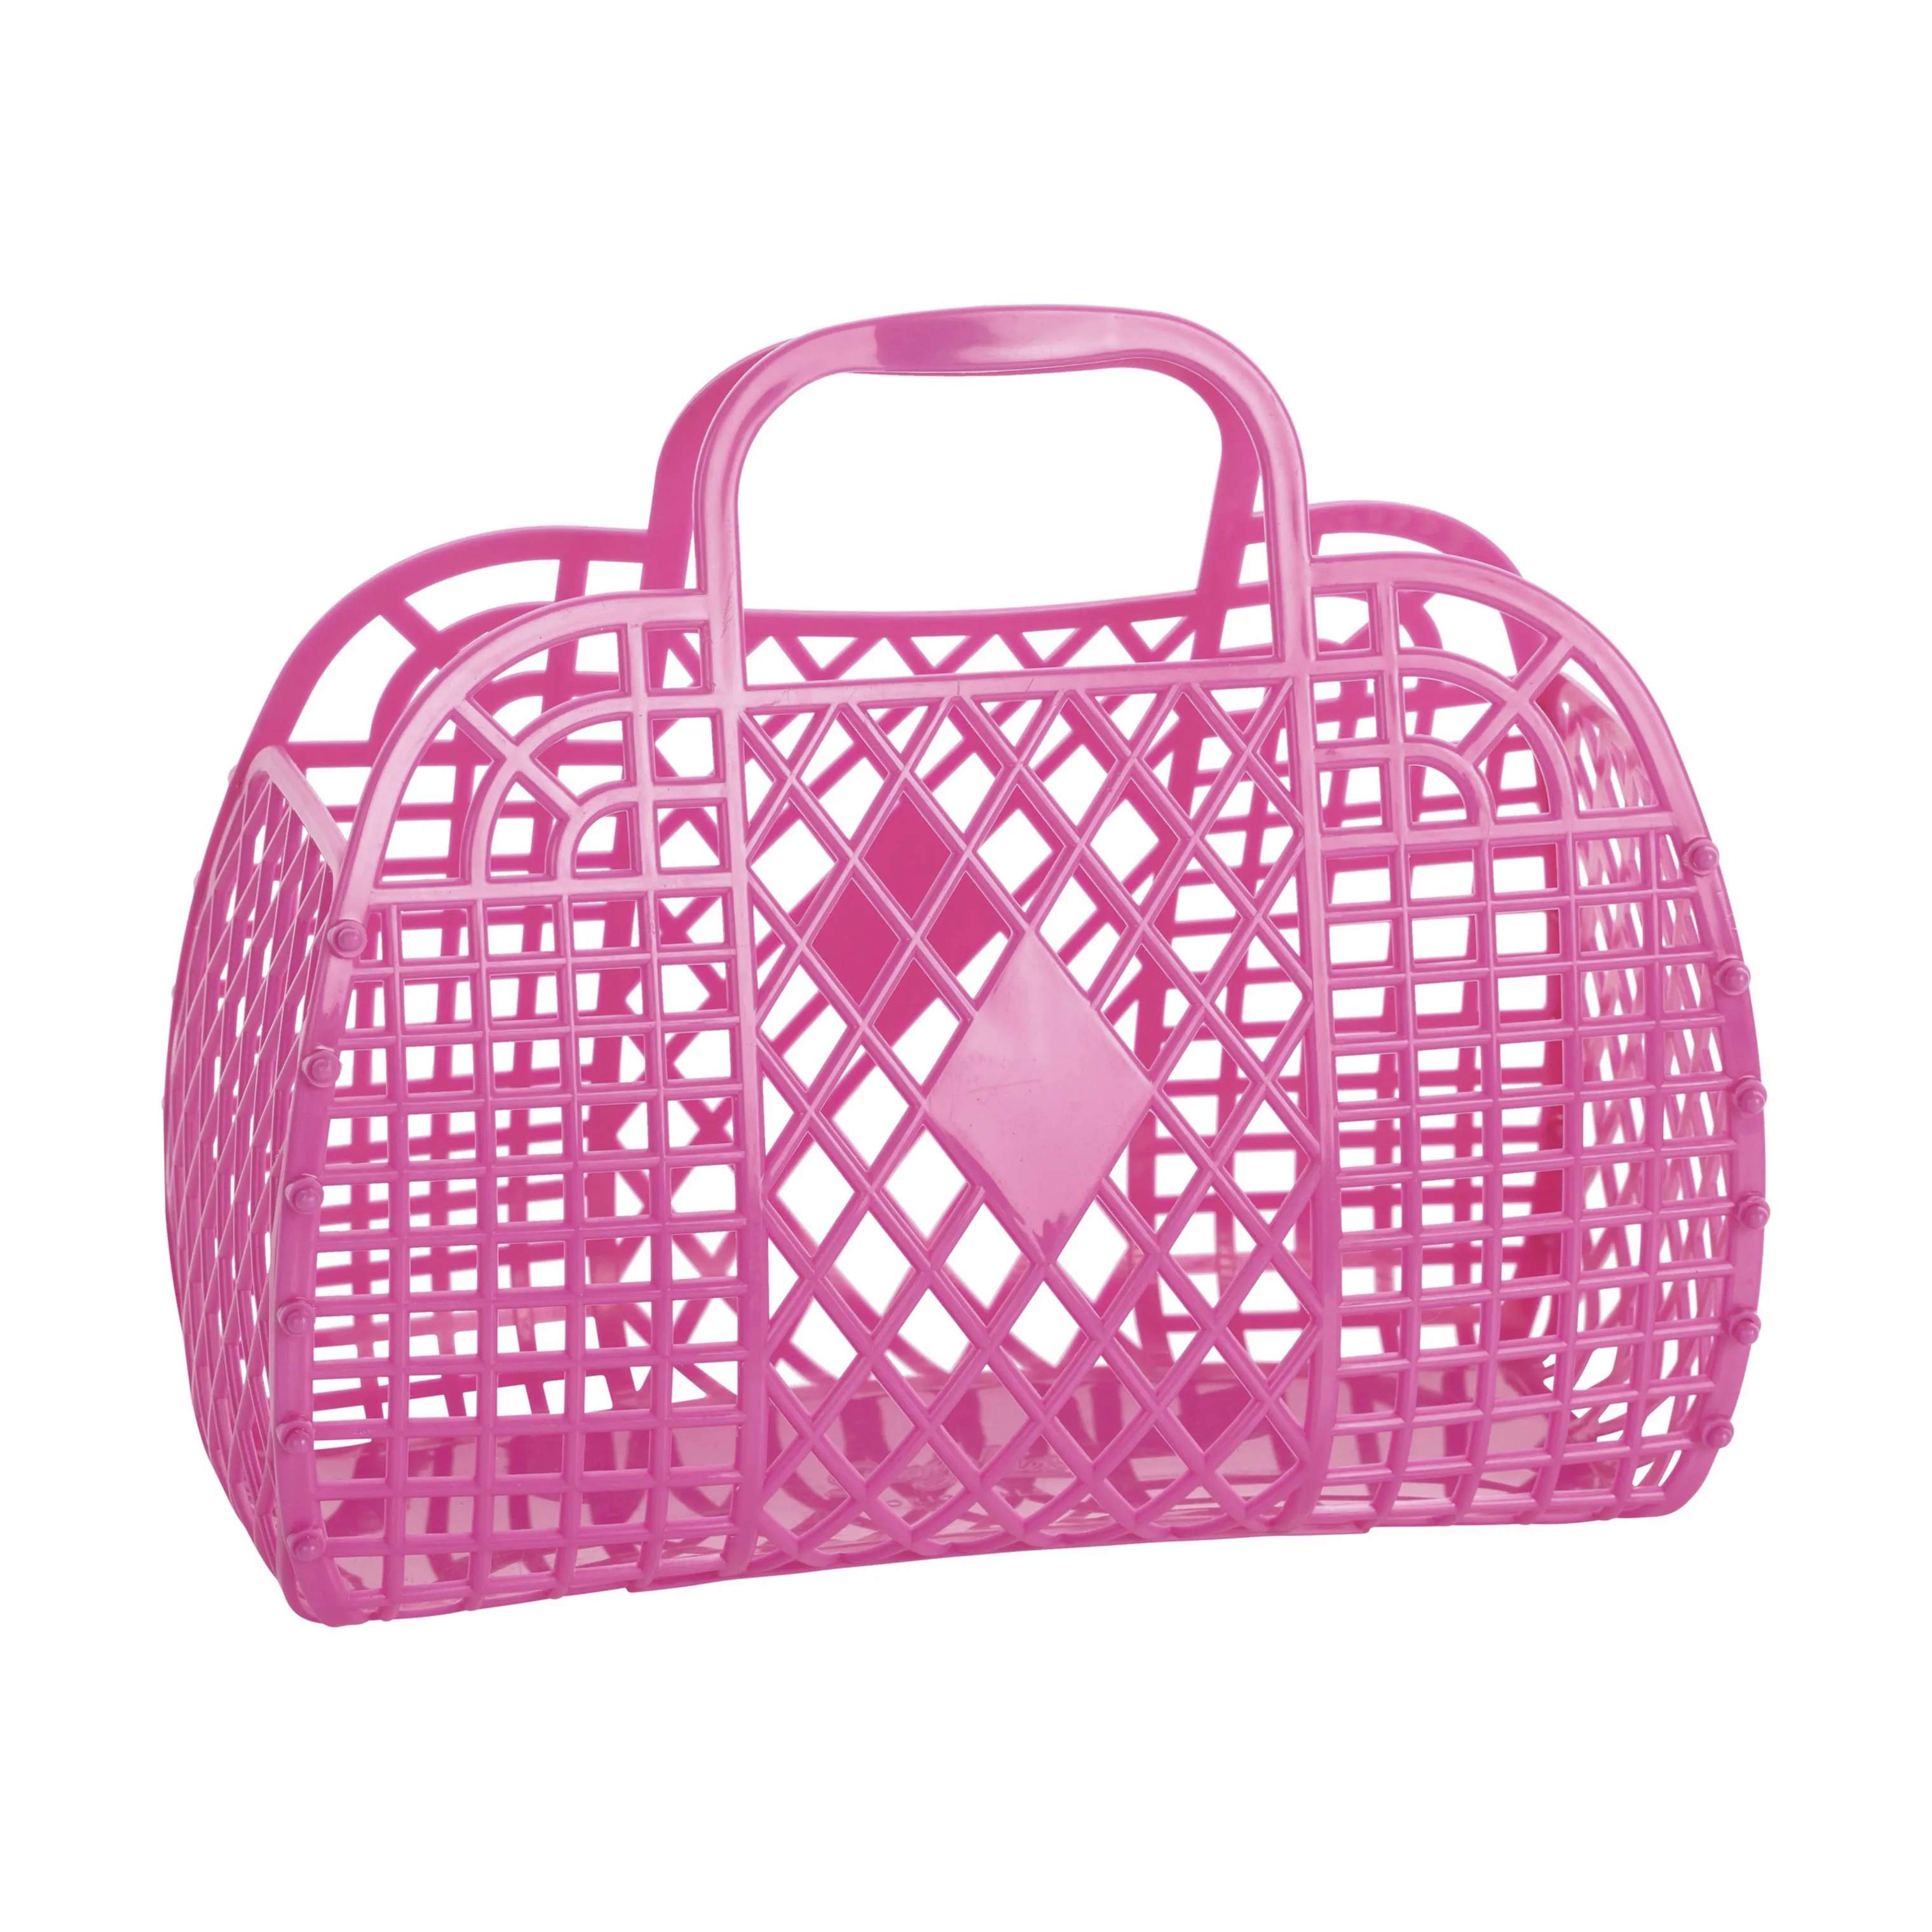 Retro Basket, berry pink, large